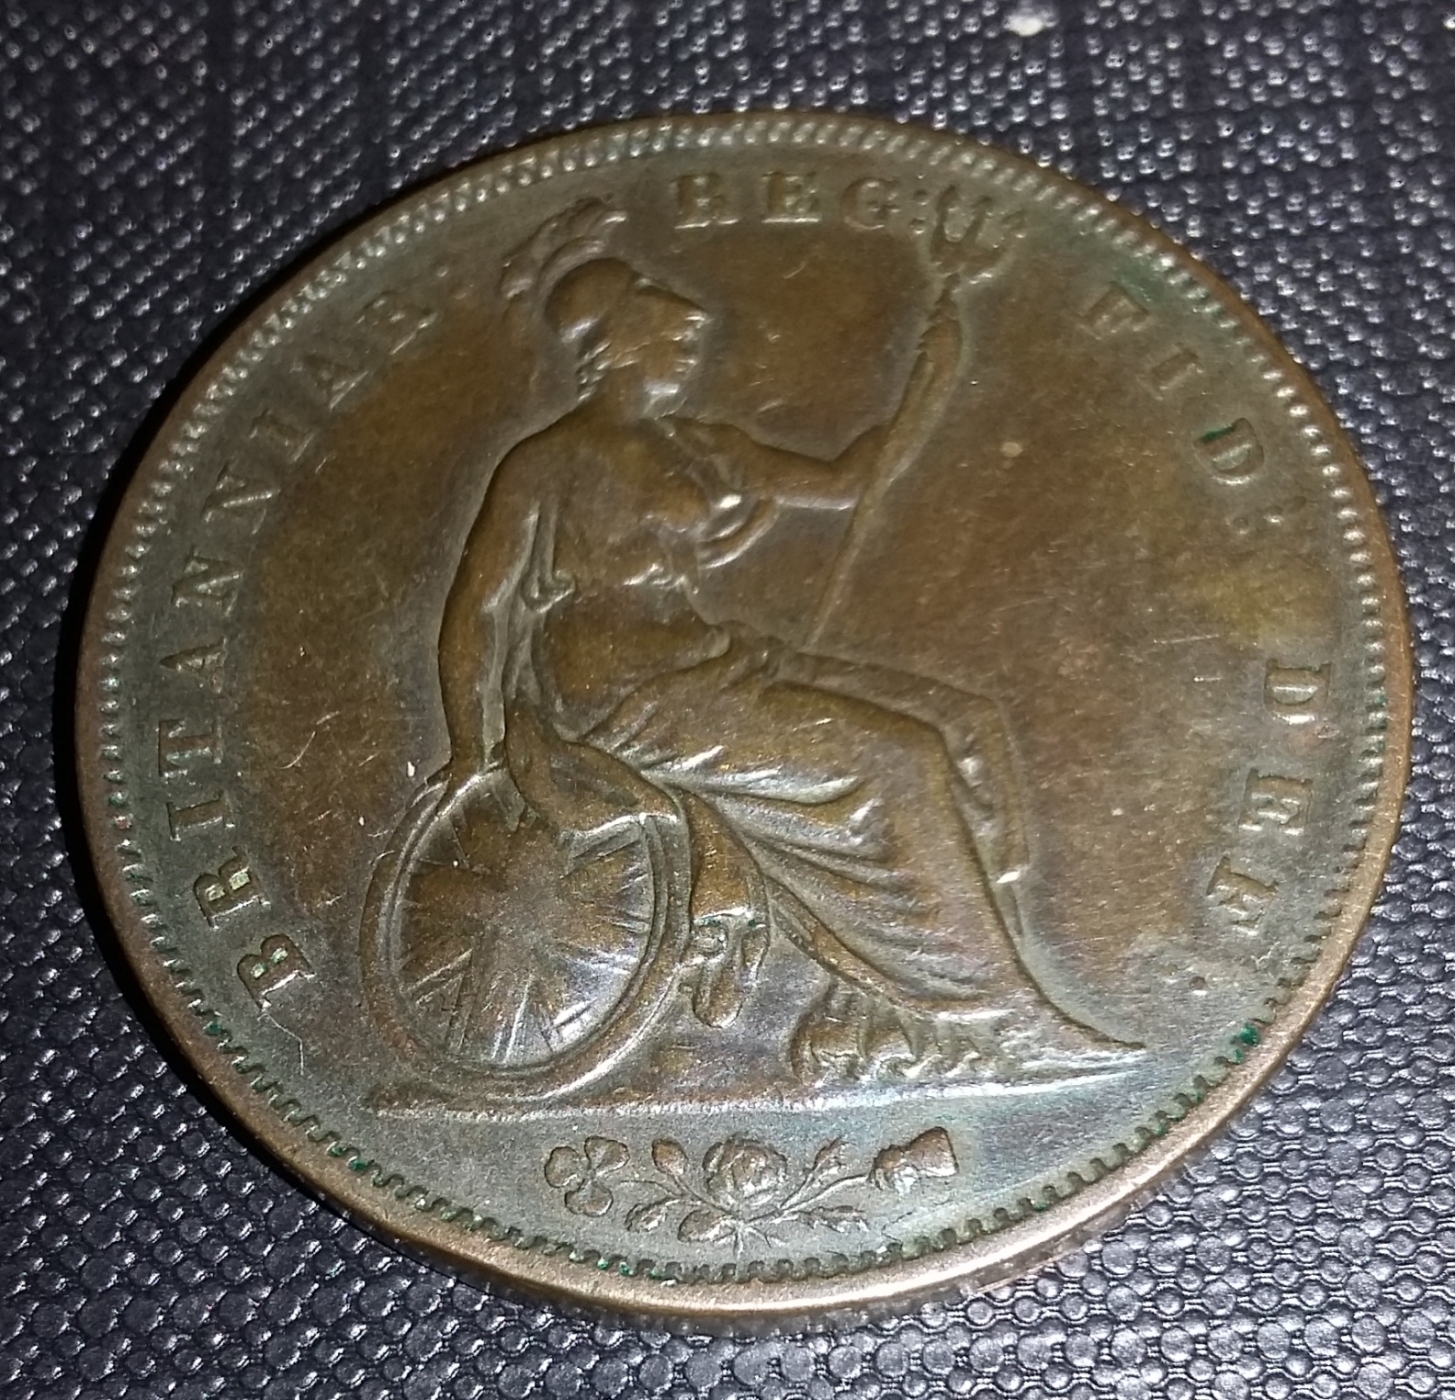 Penny 1853, Victoria (1837-1901) - Great Britain - Coin - 42008